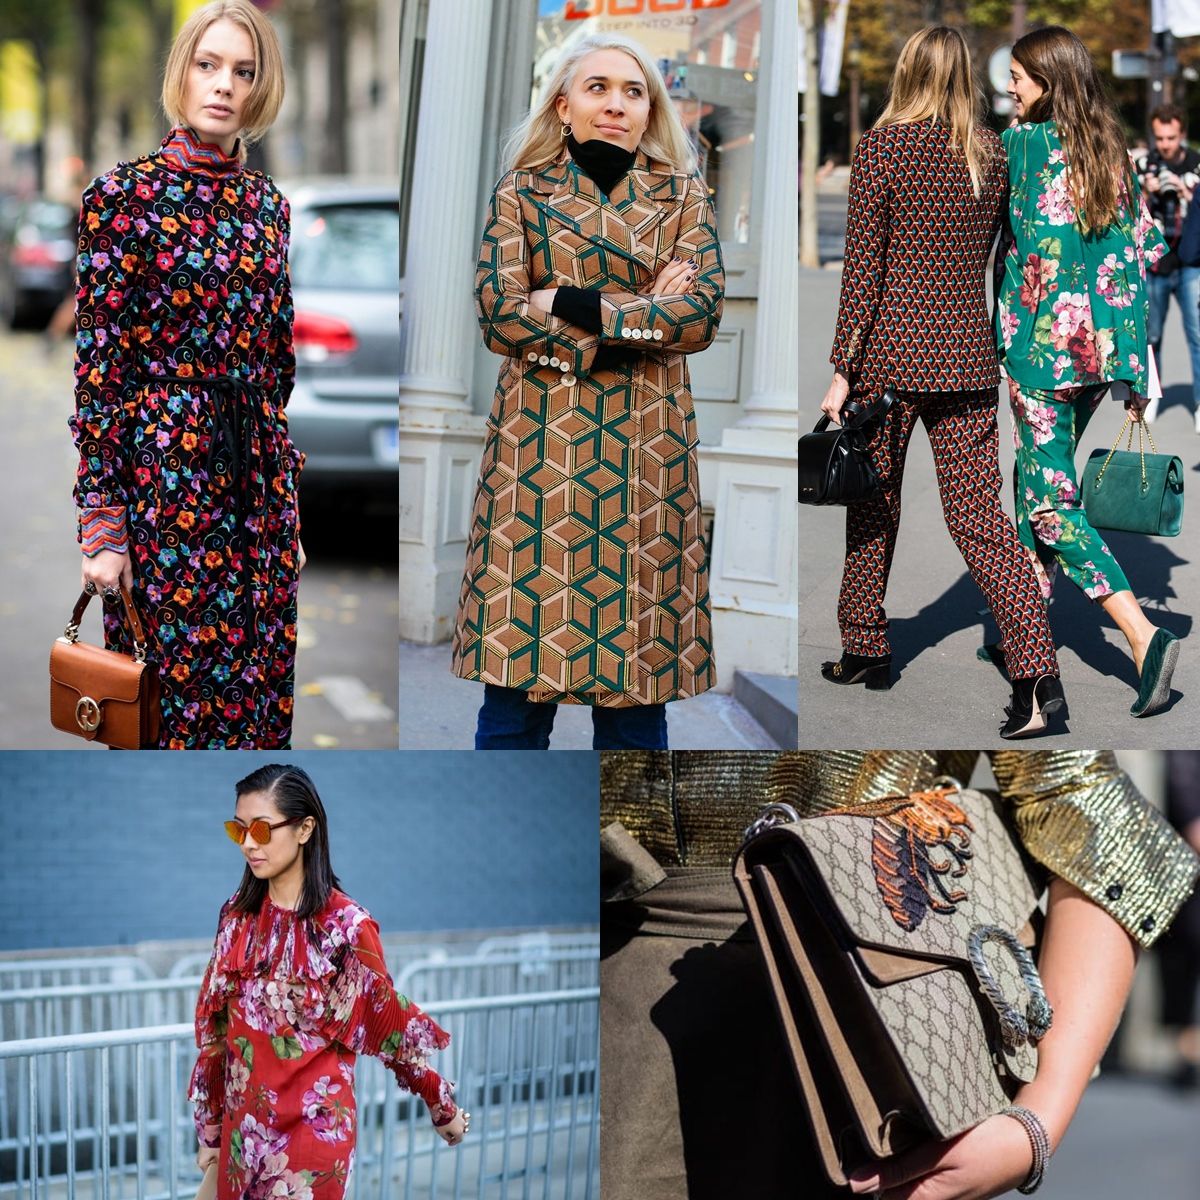 GUCCI Dress Dominates Street Style Bloggers and Fashion Editors